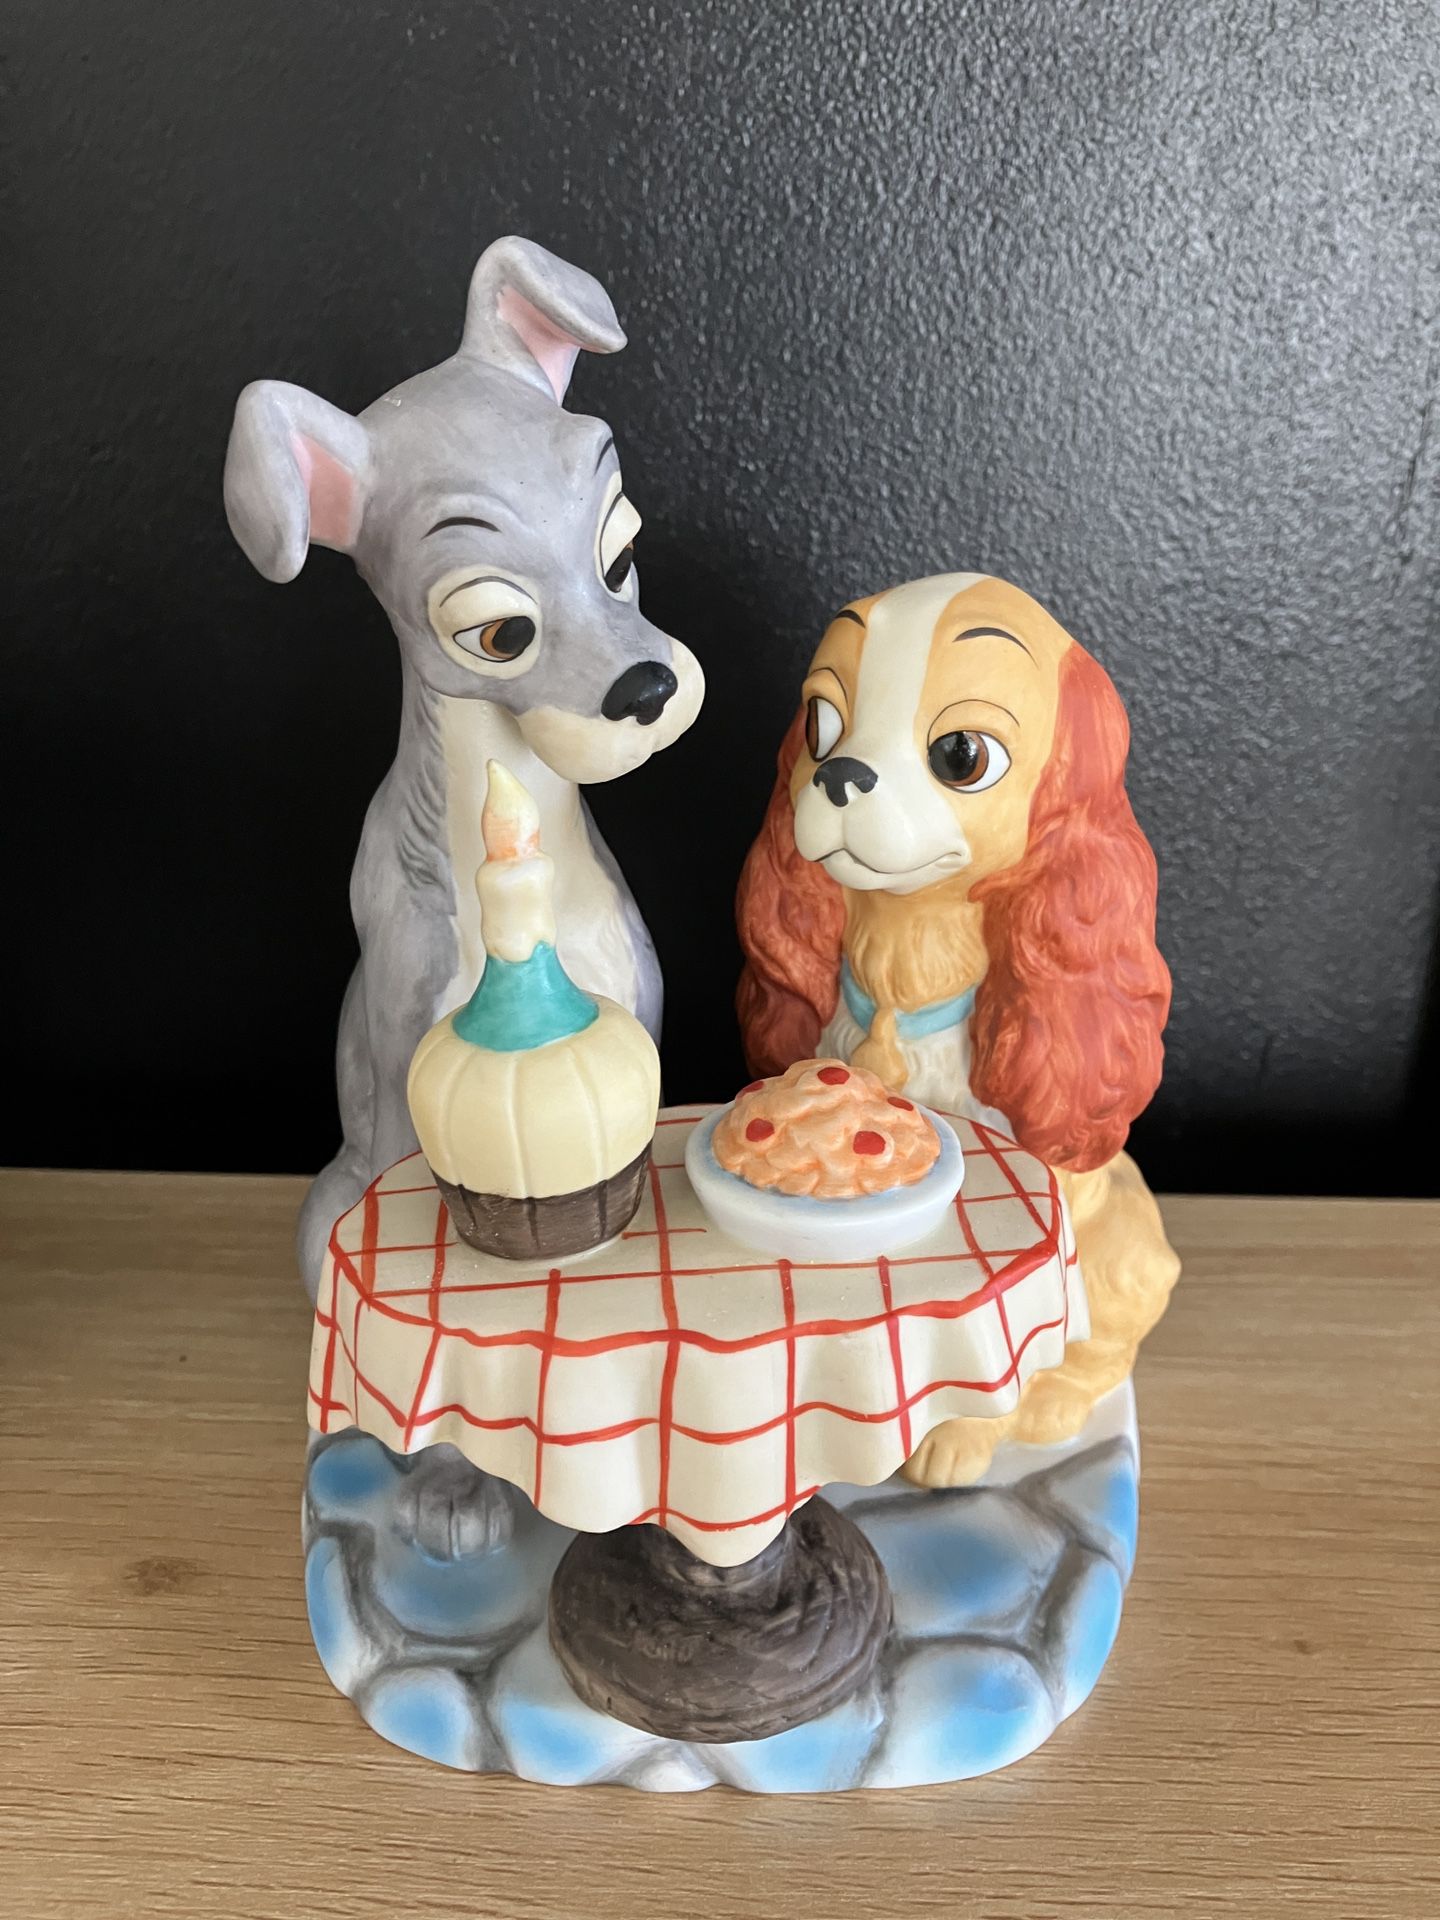 Ceramic “Lady And The Tramp” Disney Figurine